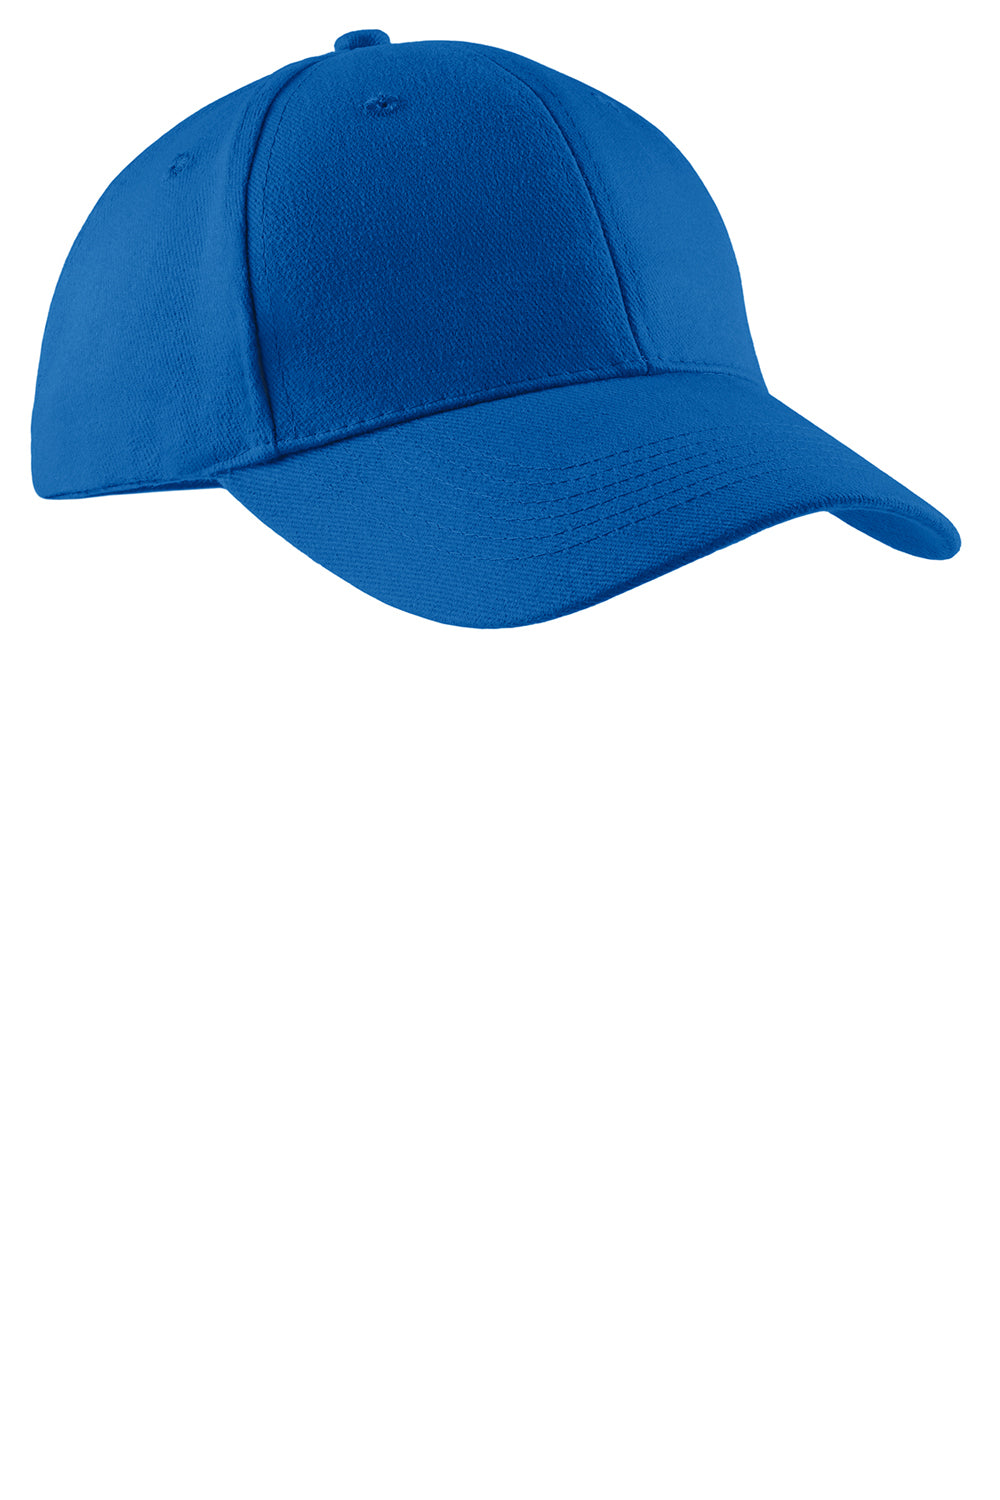 Port & Company CP82 Mens Adjustable Hat Royal Blue Front